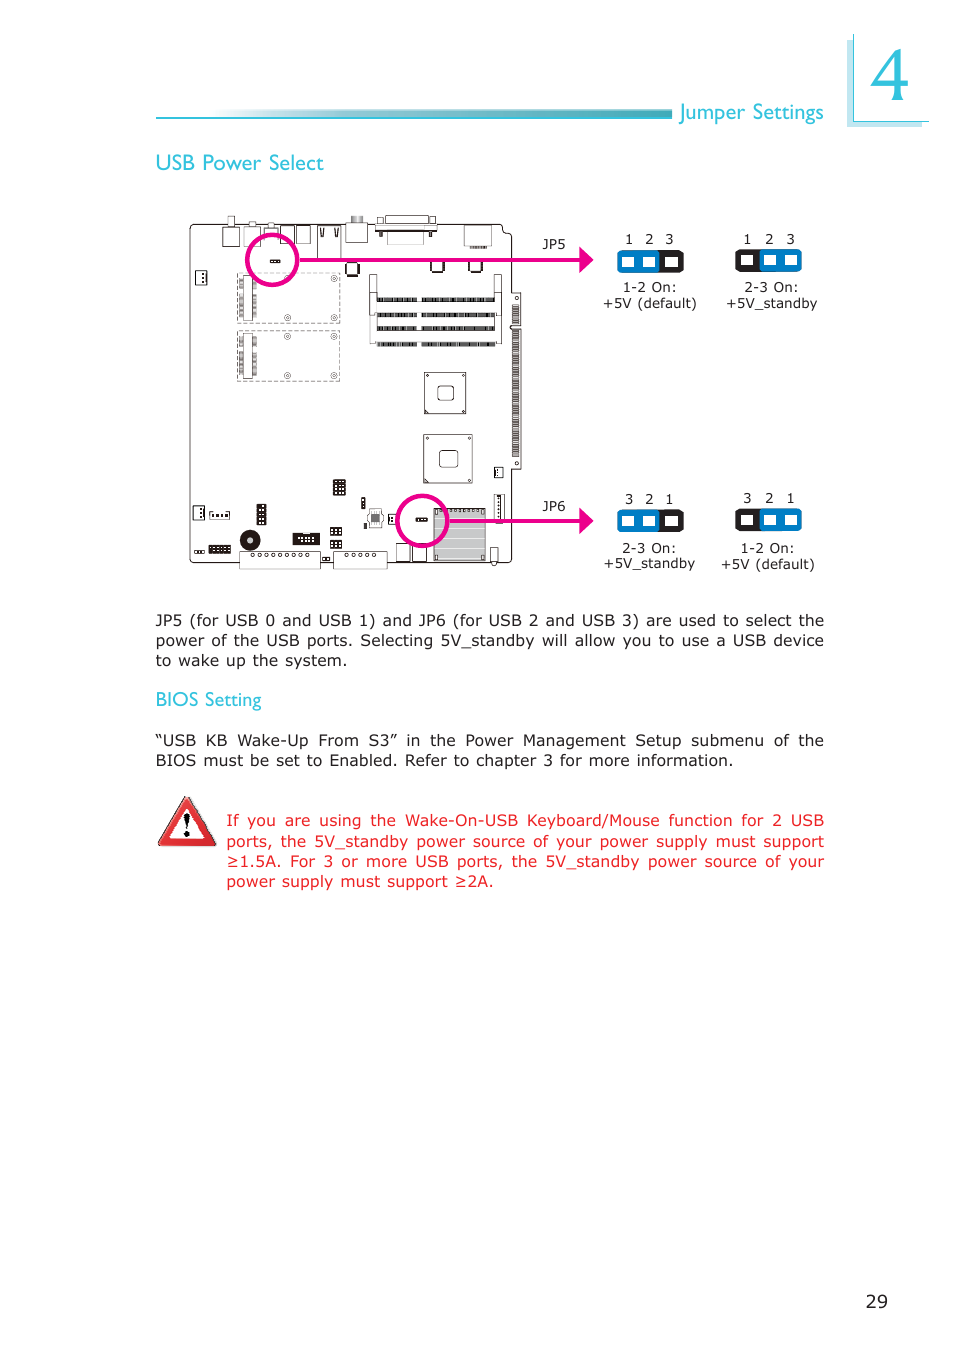 Jumper settings usb power select | DFI DS912-OT Manual User Manual | Page  29 / 123 | Original mode